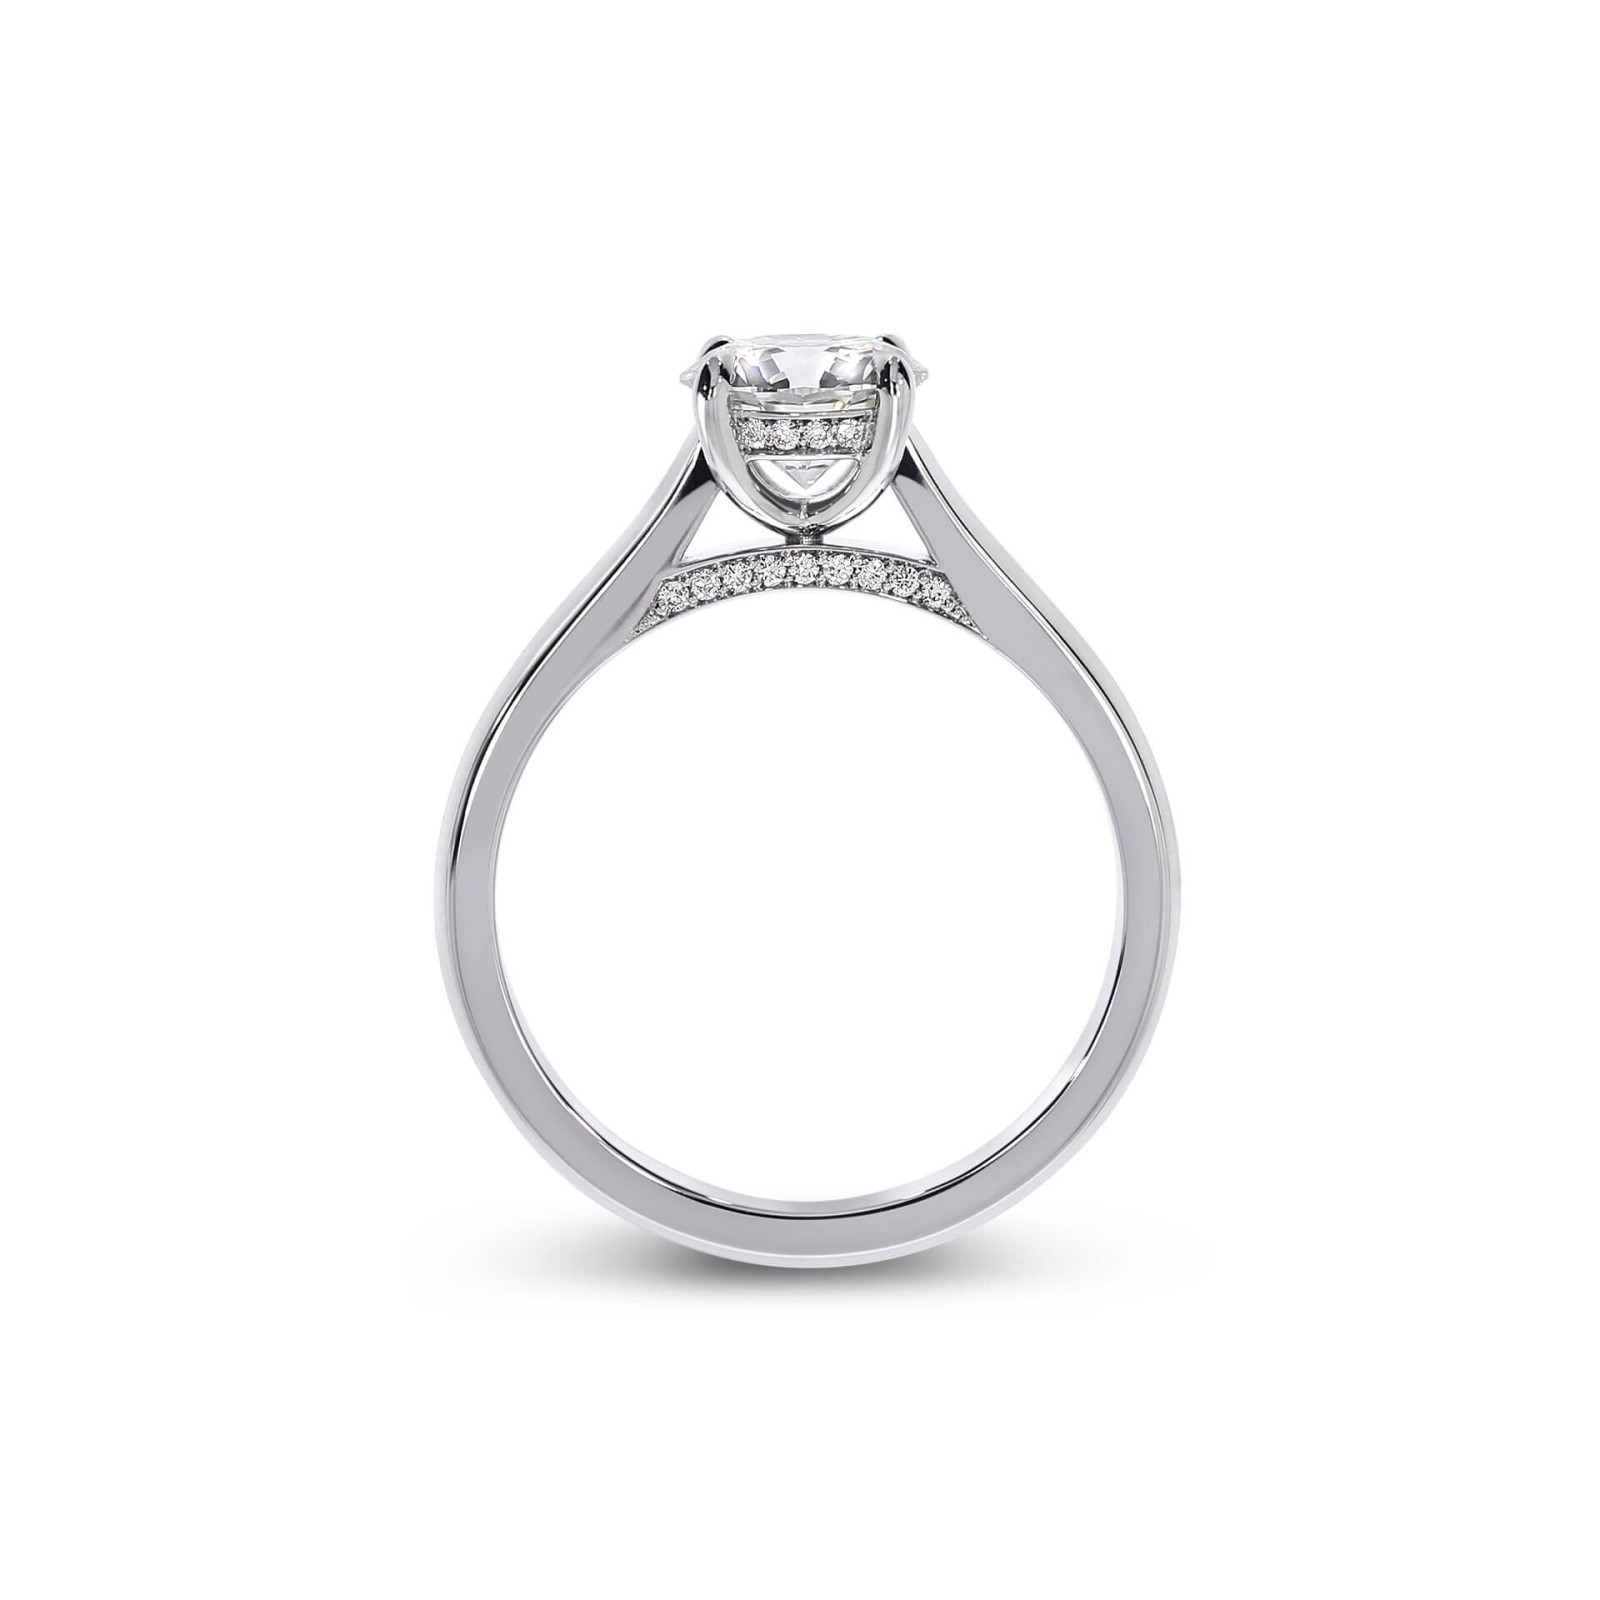 Solitaire Engagement Ring With Diamond Set Bezel & Bridge